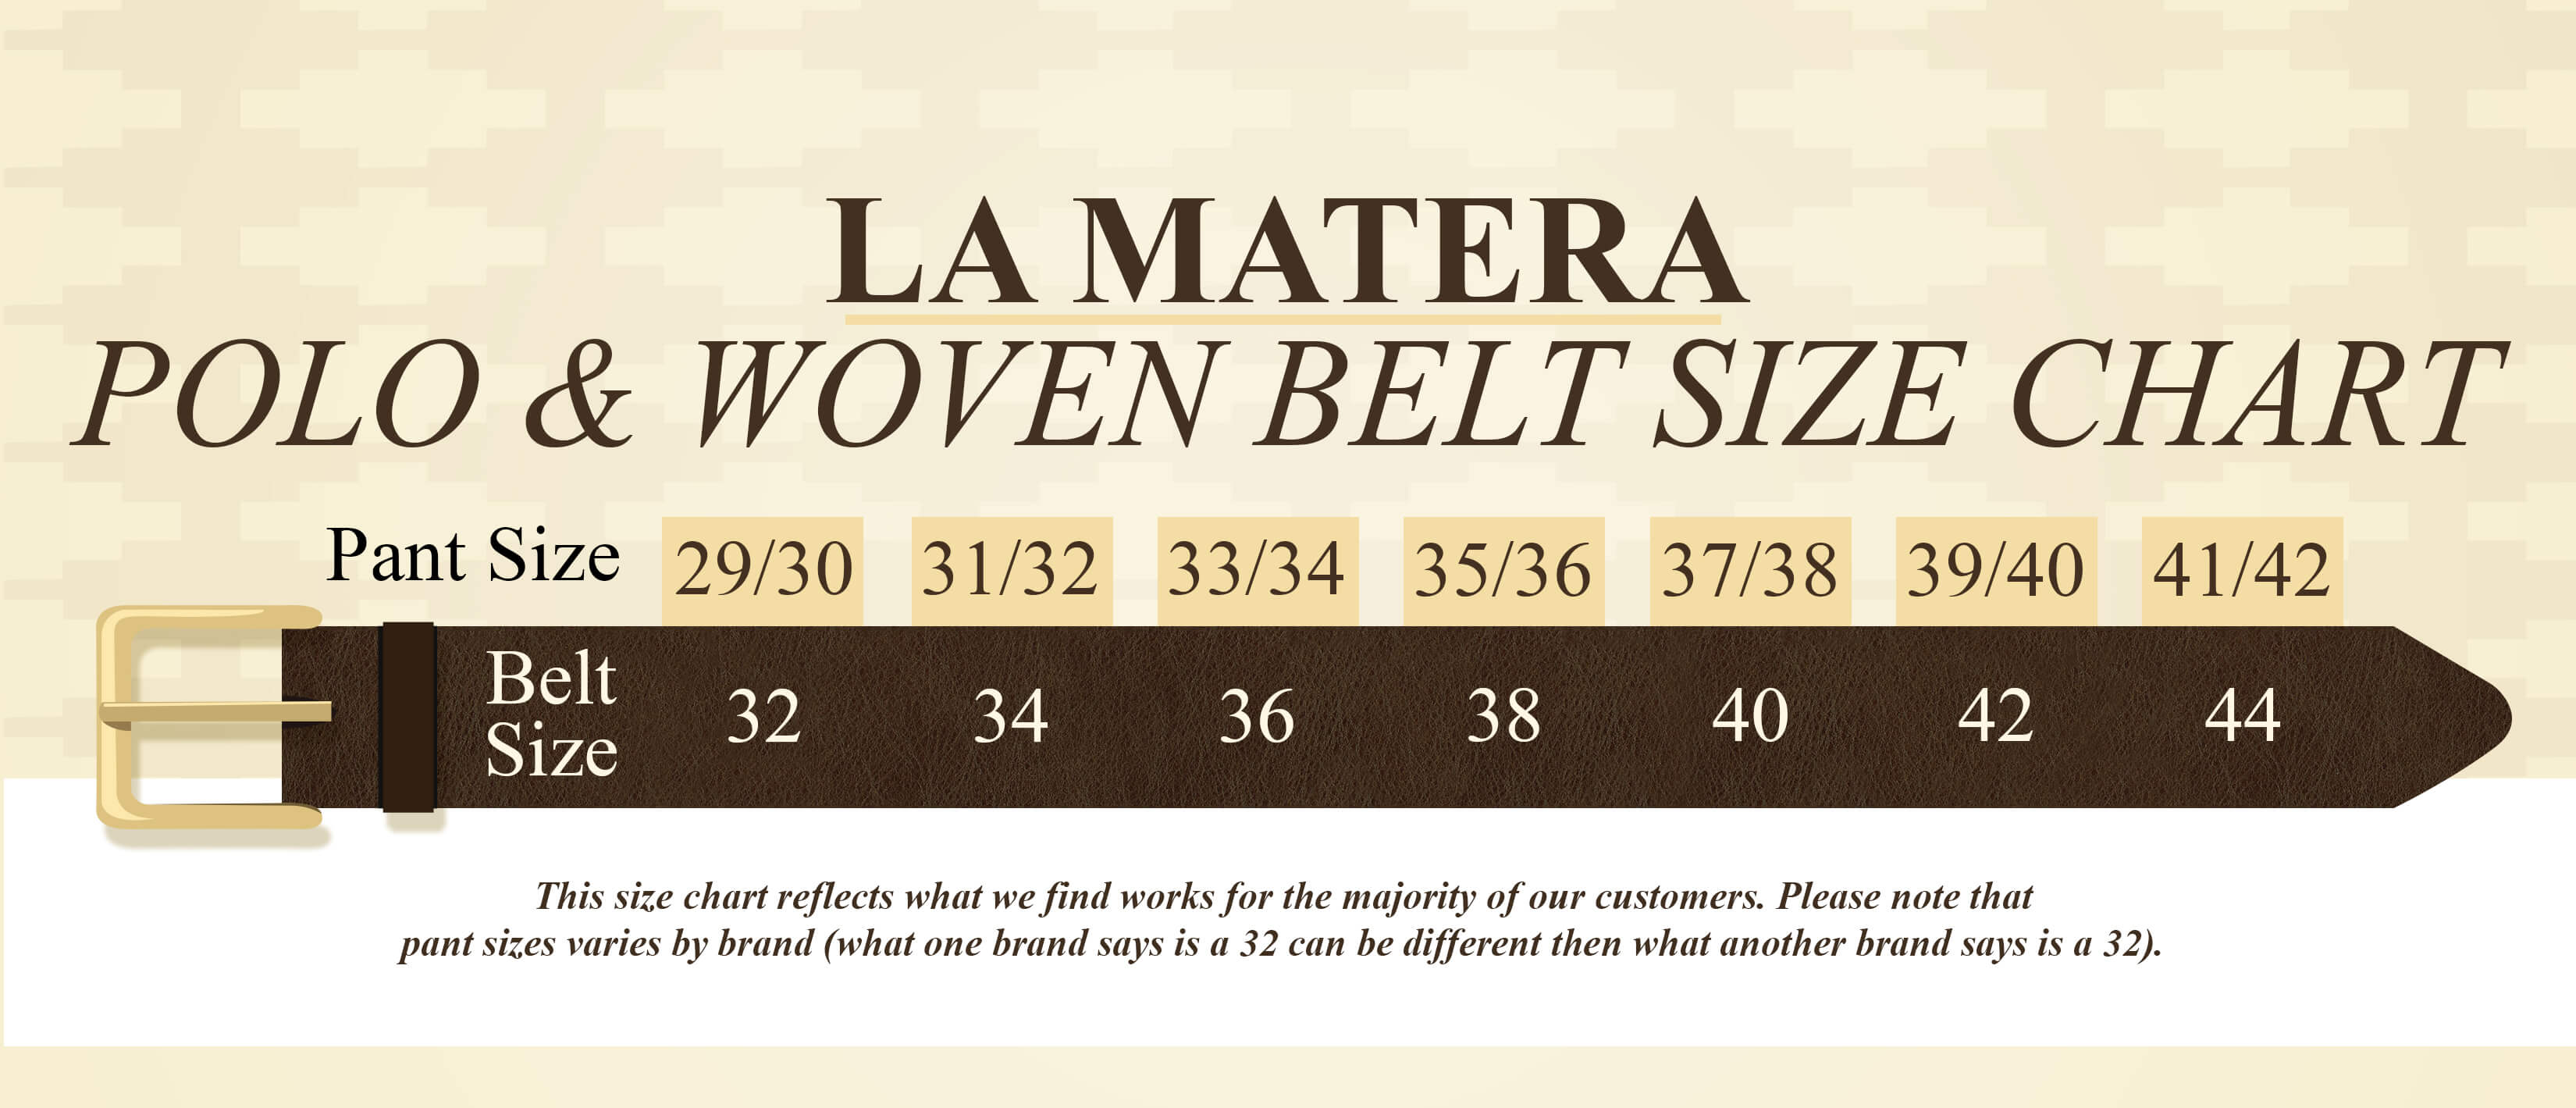 belt size for 32 waist in cm